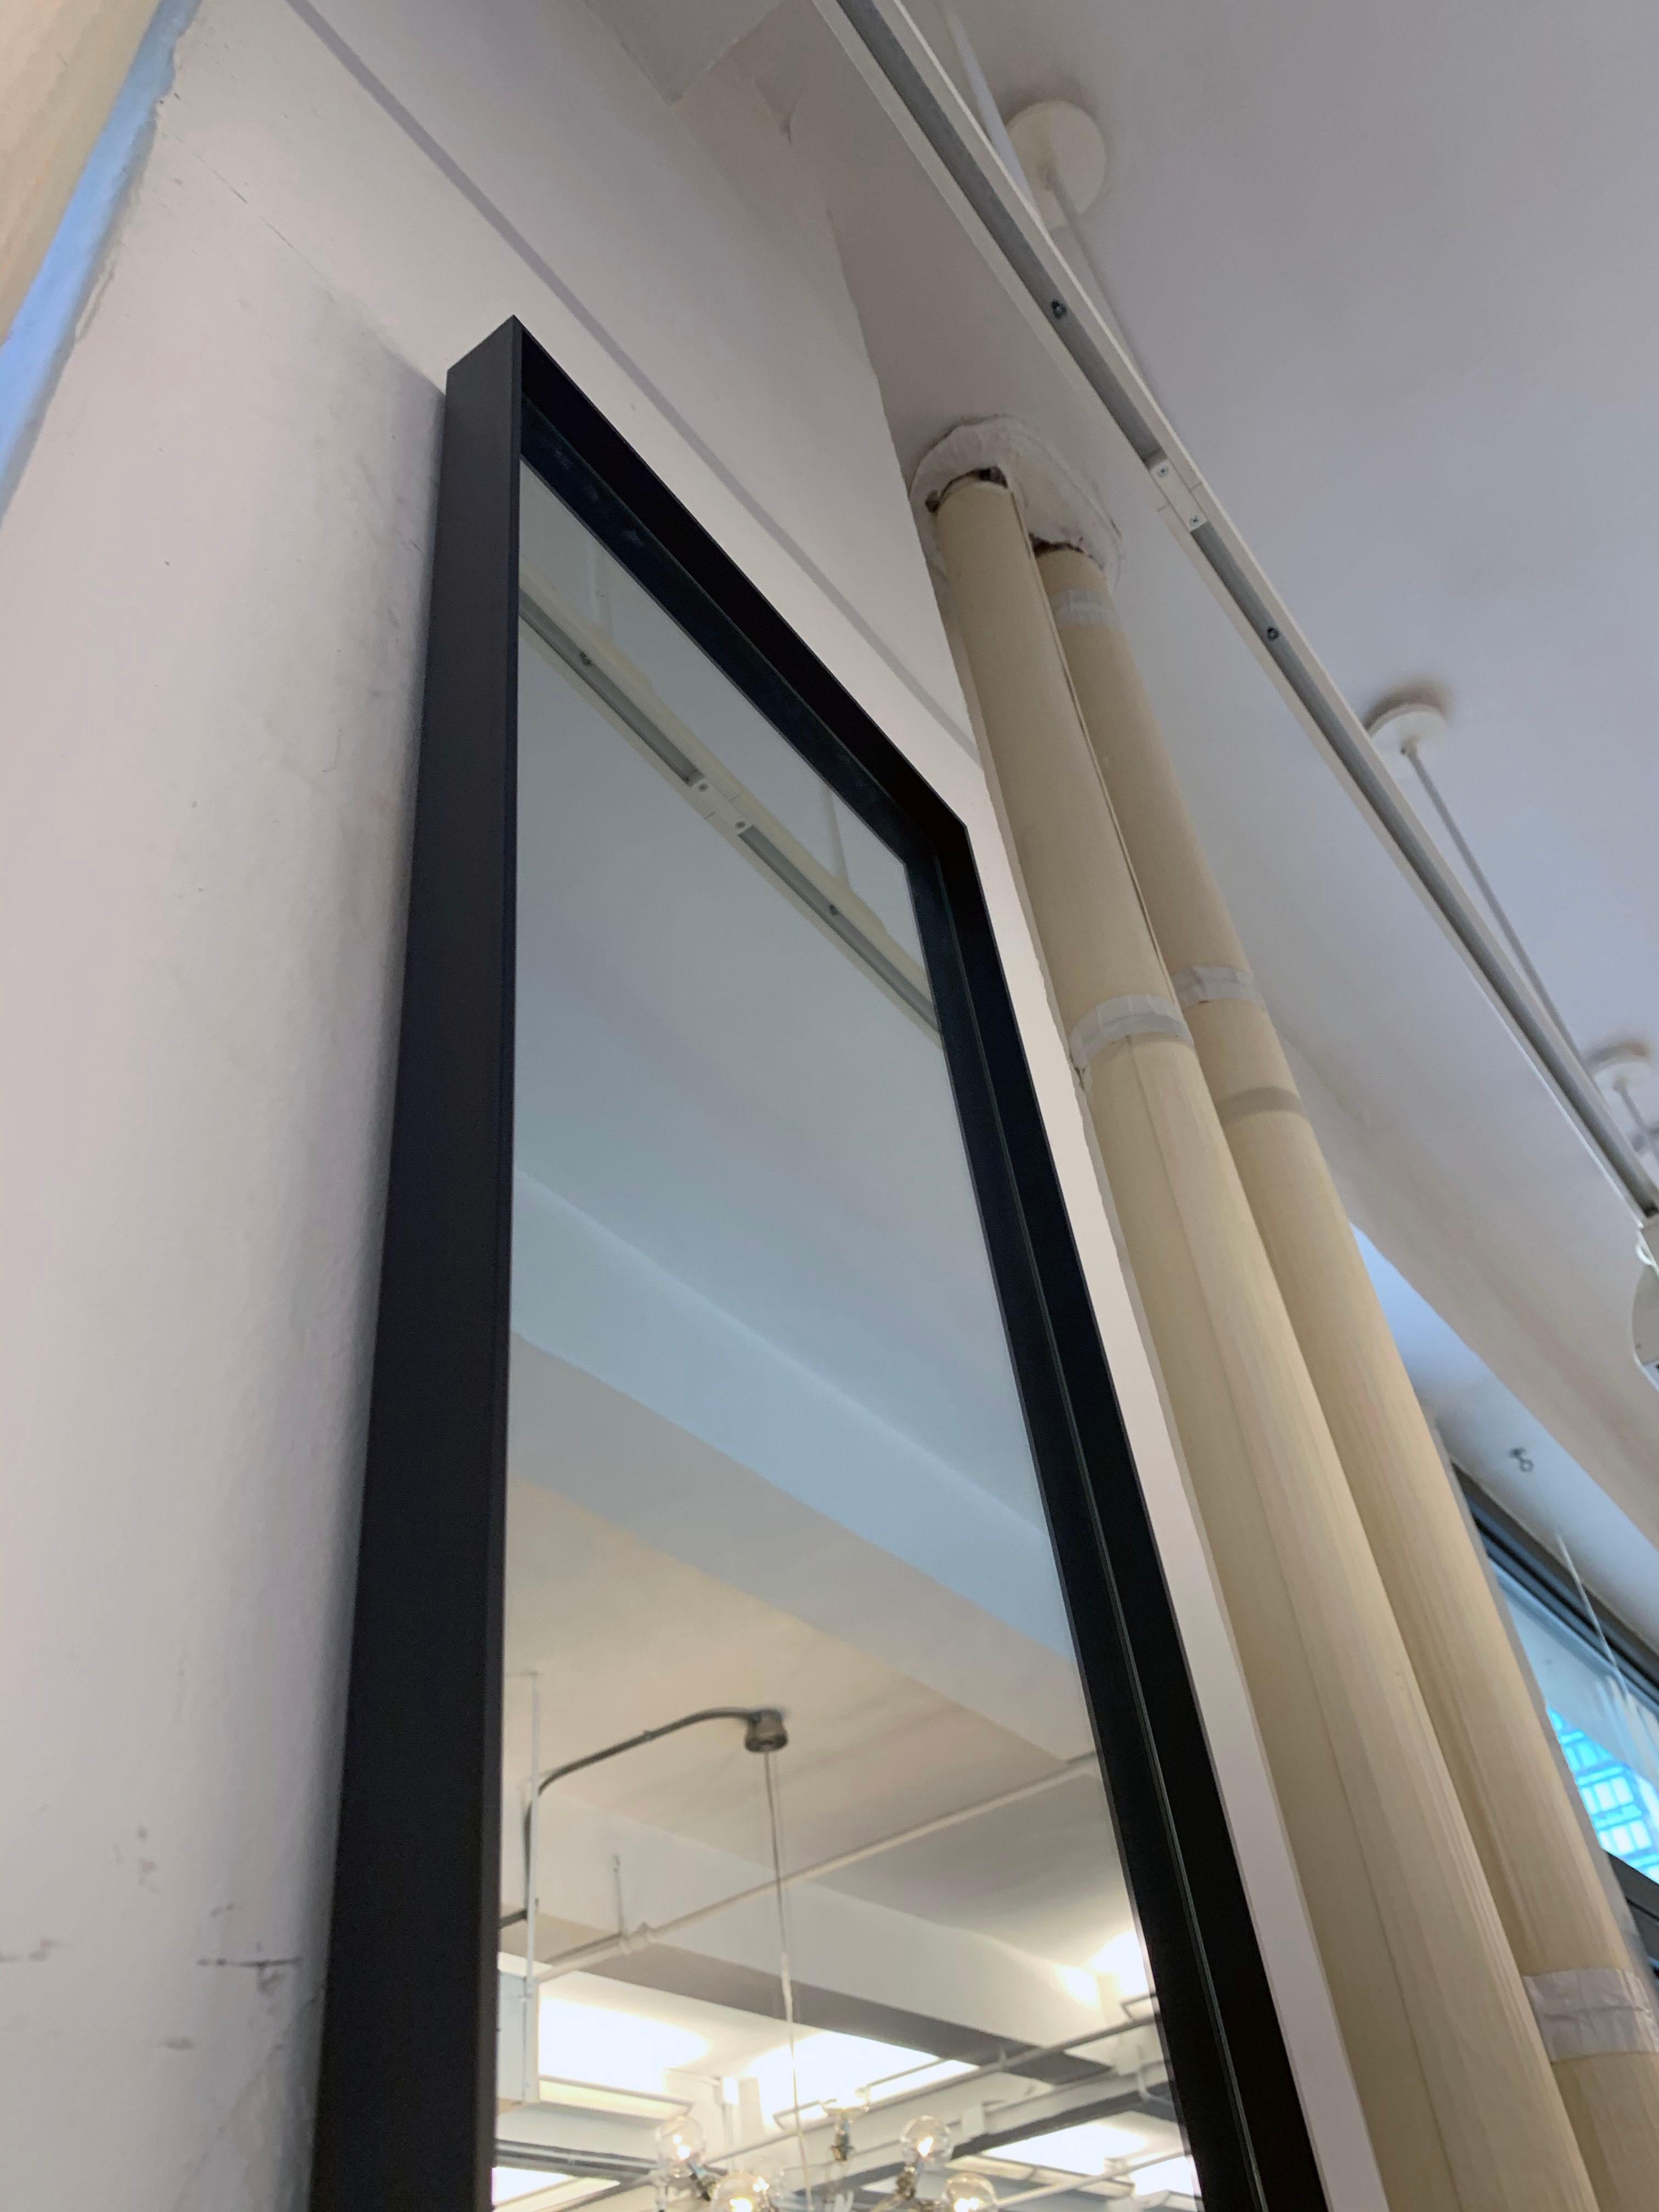 Black frame mirror
Measures: 16.8